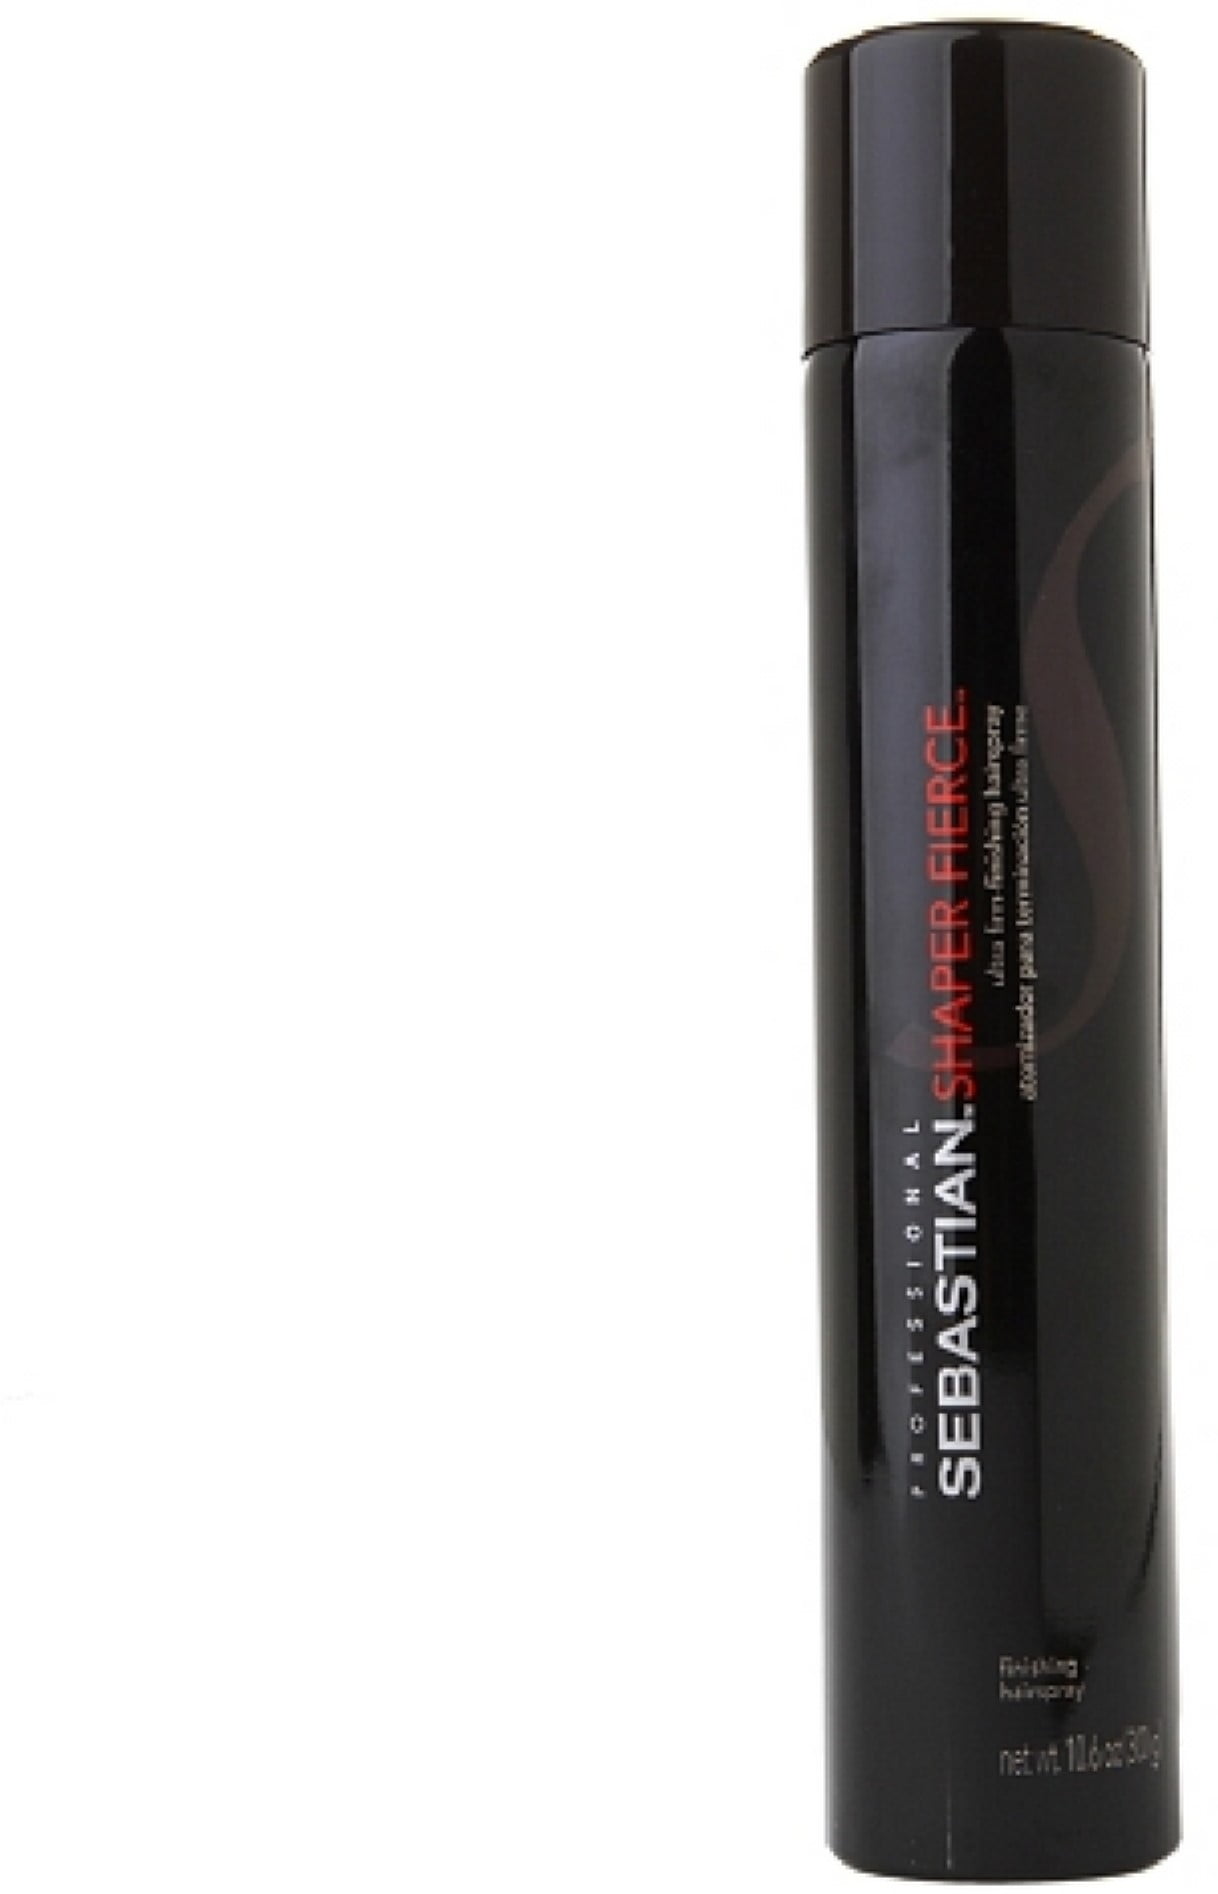 Sebastian Shaper Regular Hair Spray 1.5 Ounce